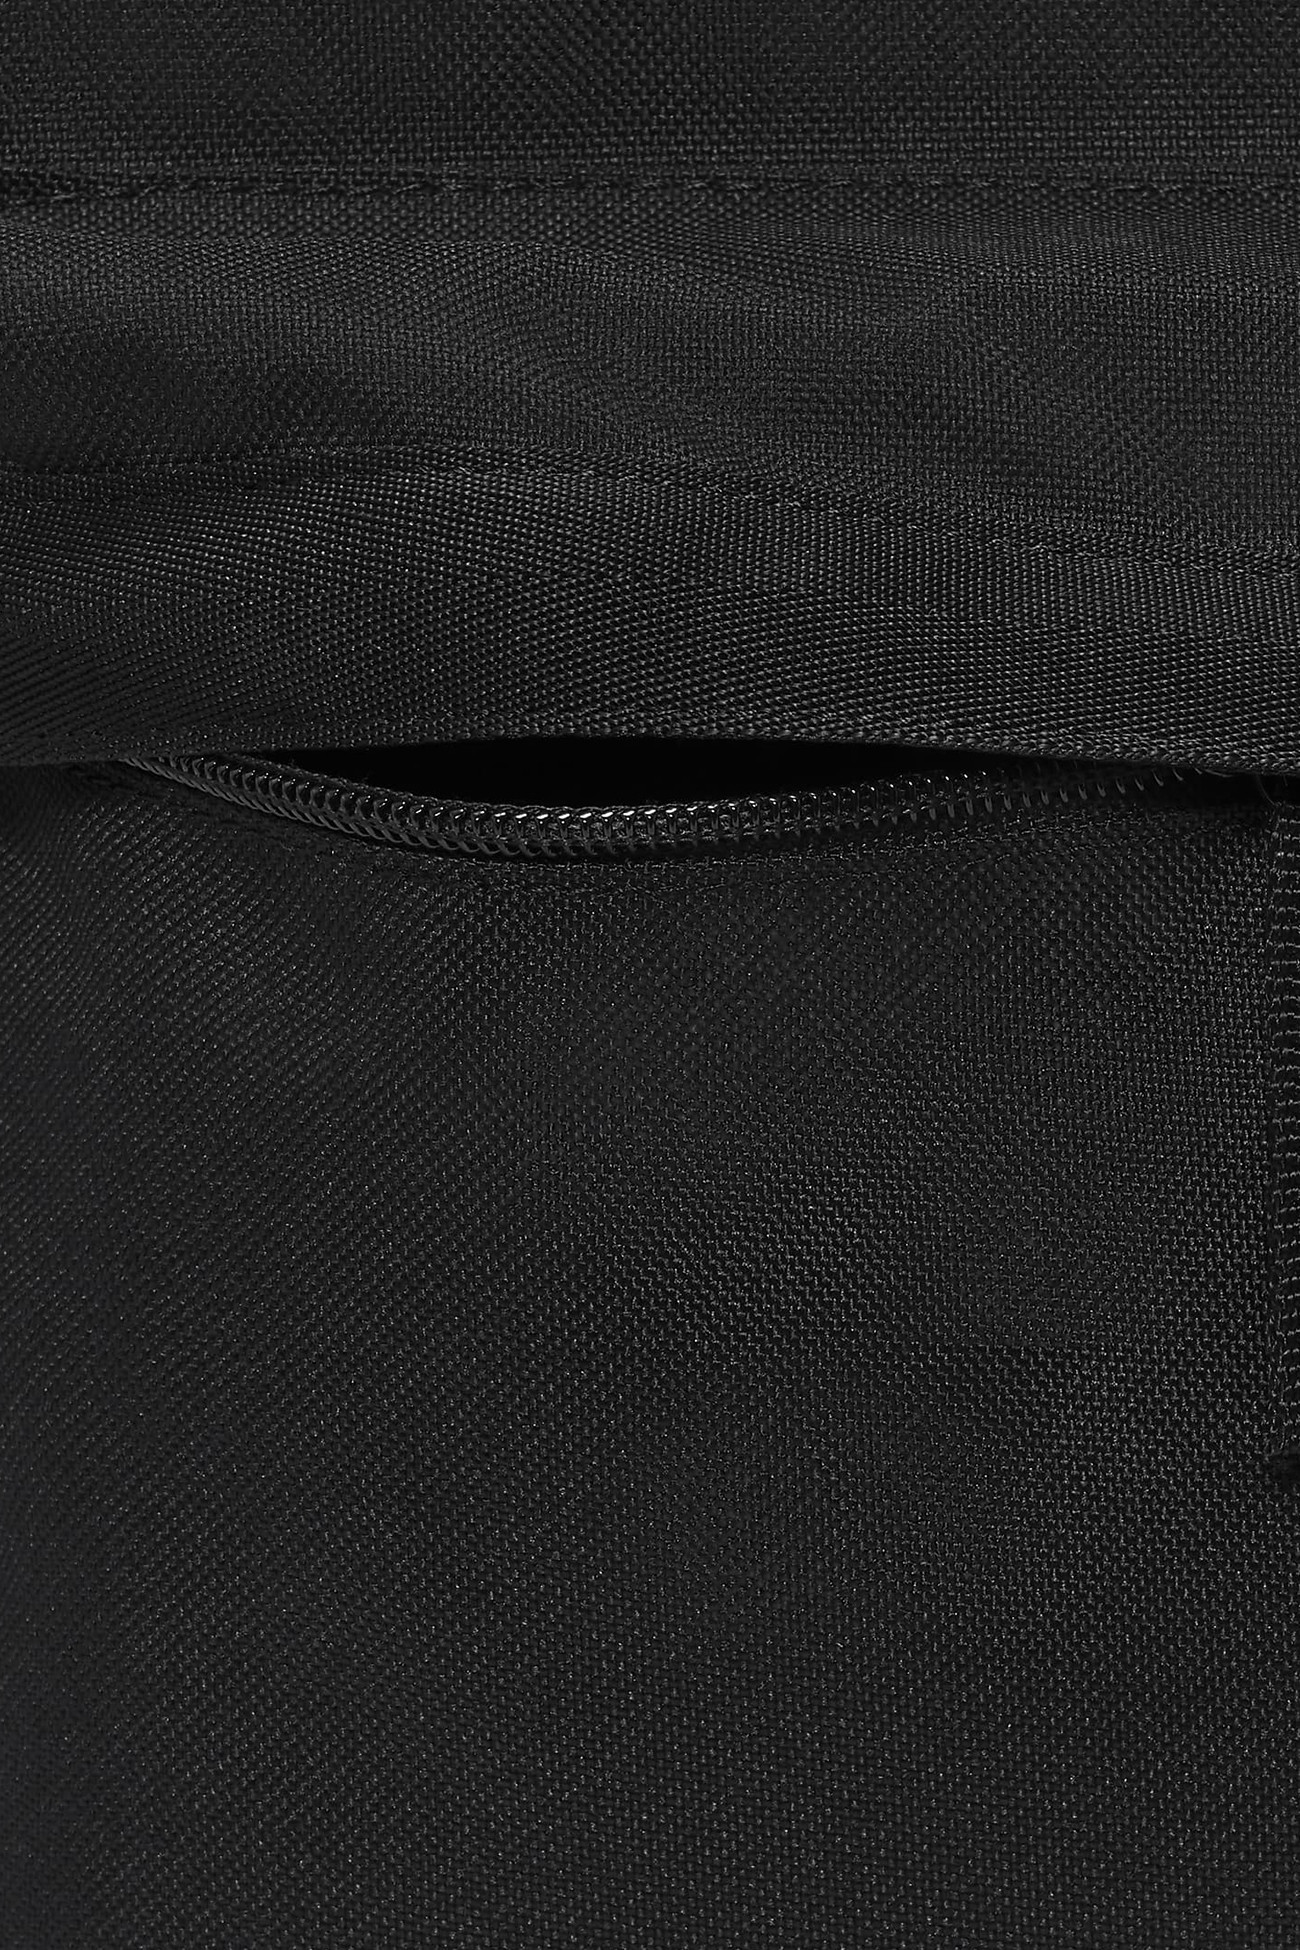 Рюкзак Nike Nk Heritage Backpack Hbr Grx черный DQ3432-010 изображение 6